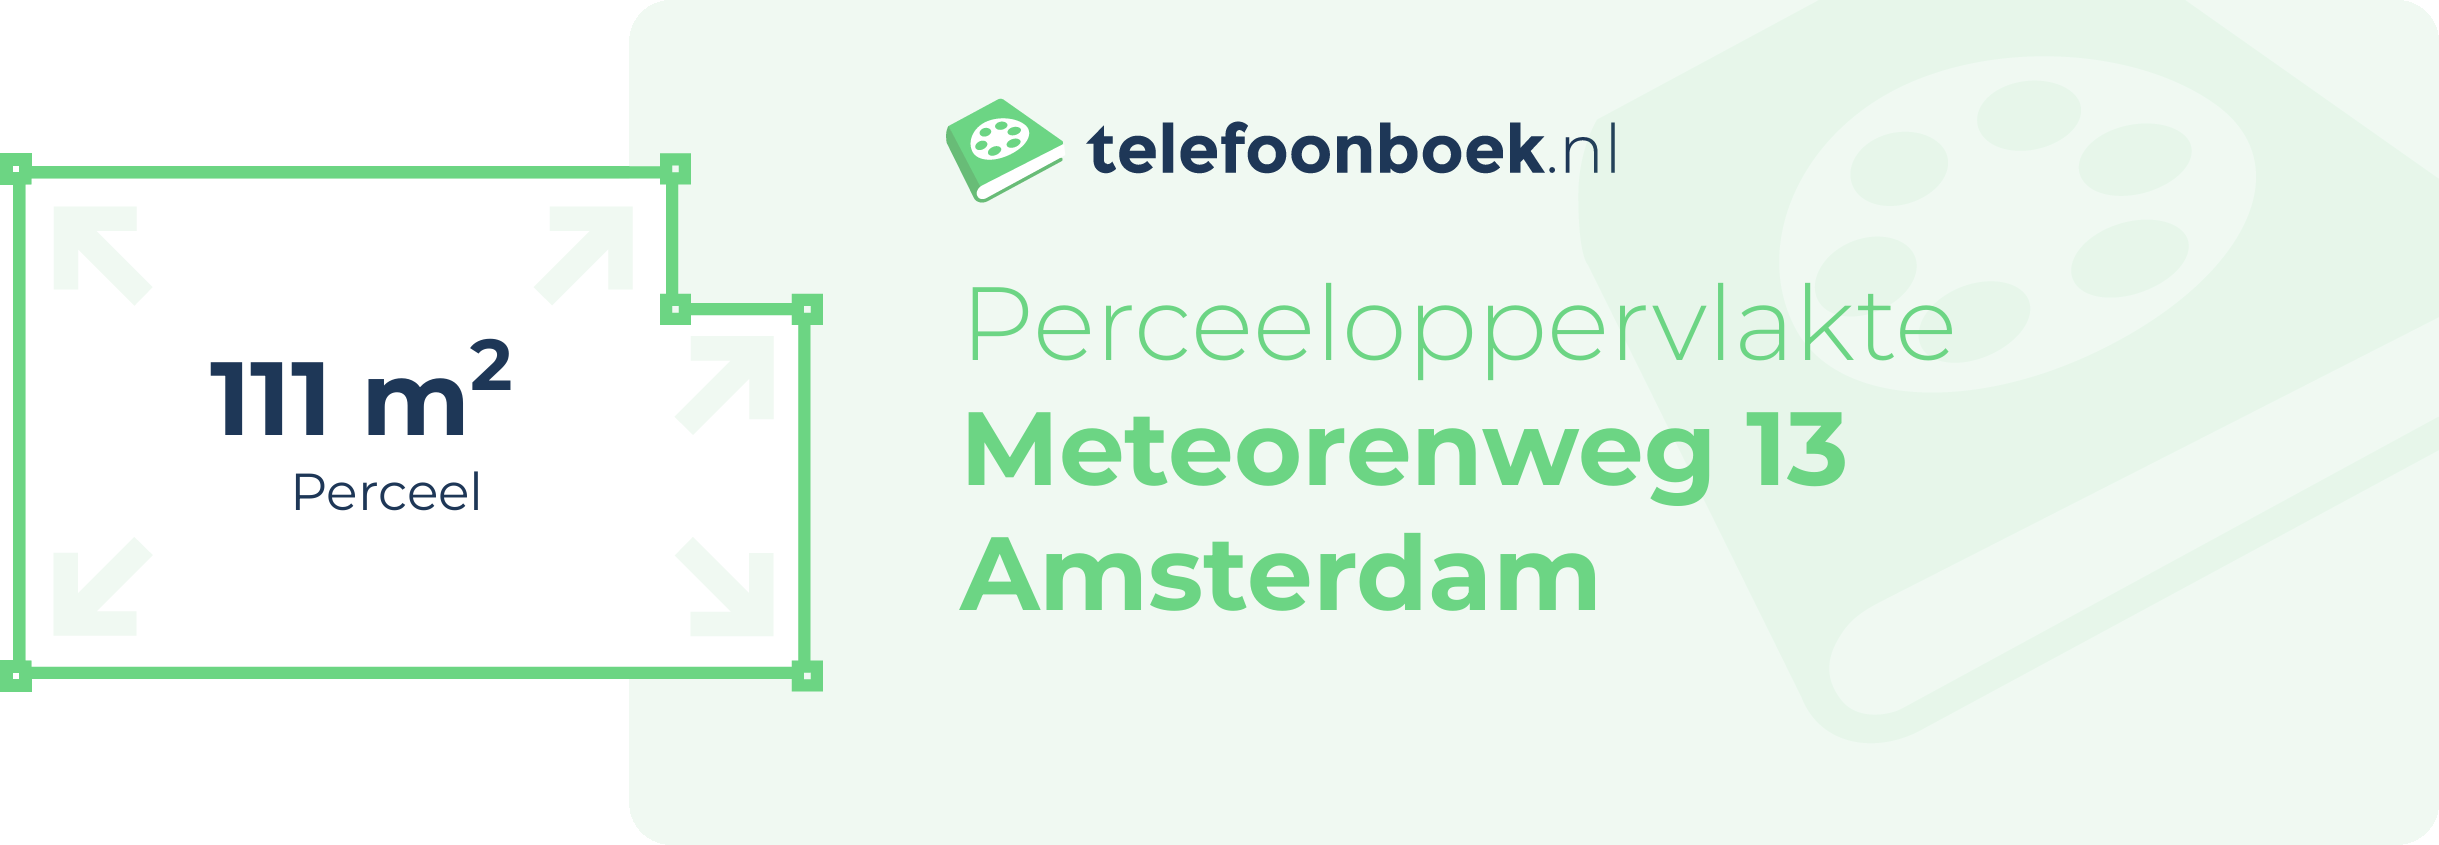 Perceeloppervlakte Meteorenweg 13 Amsterdam